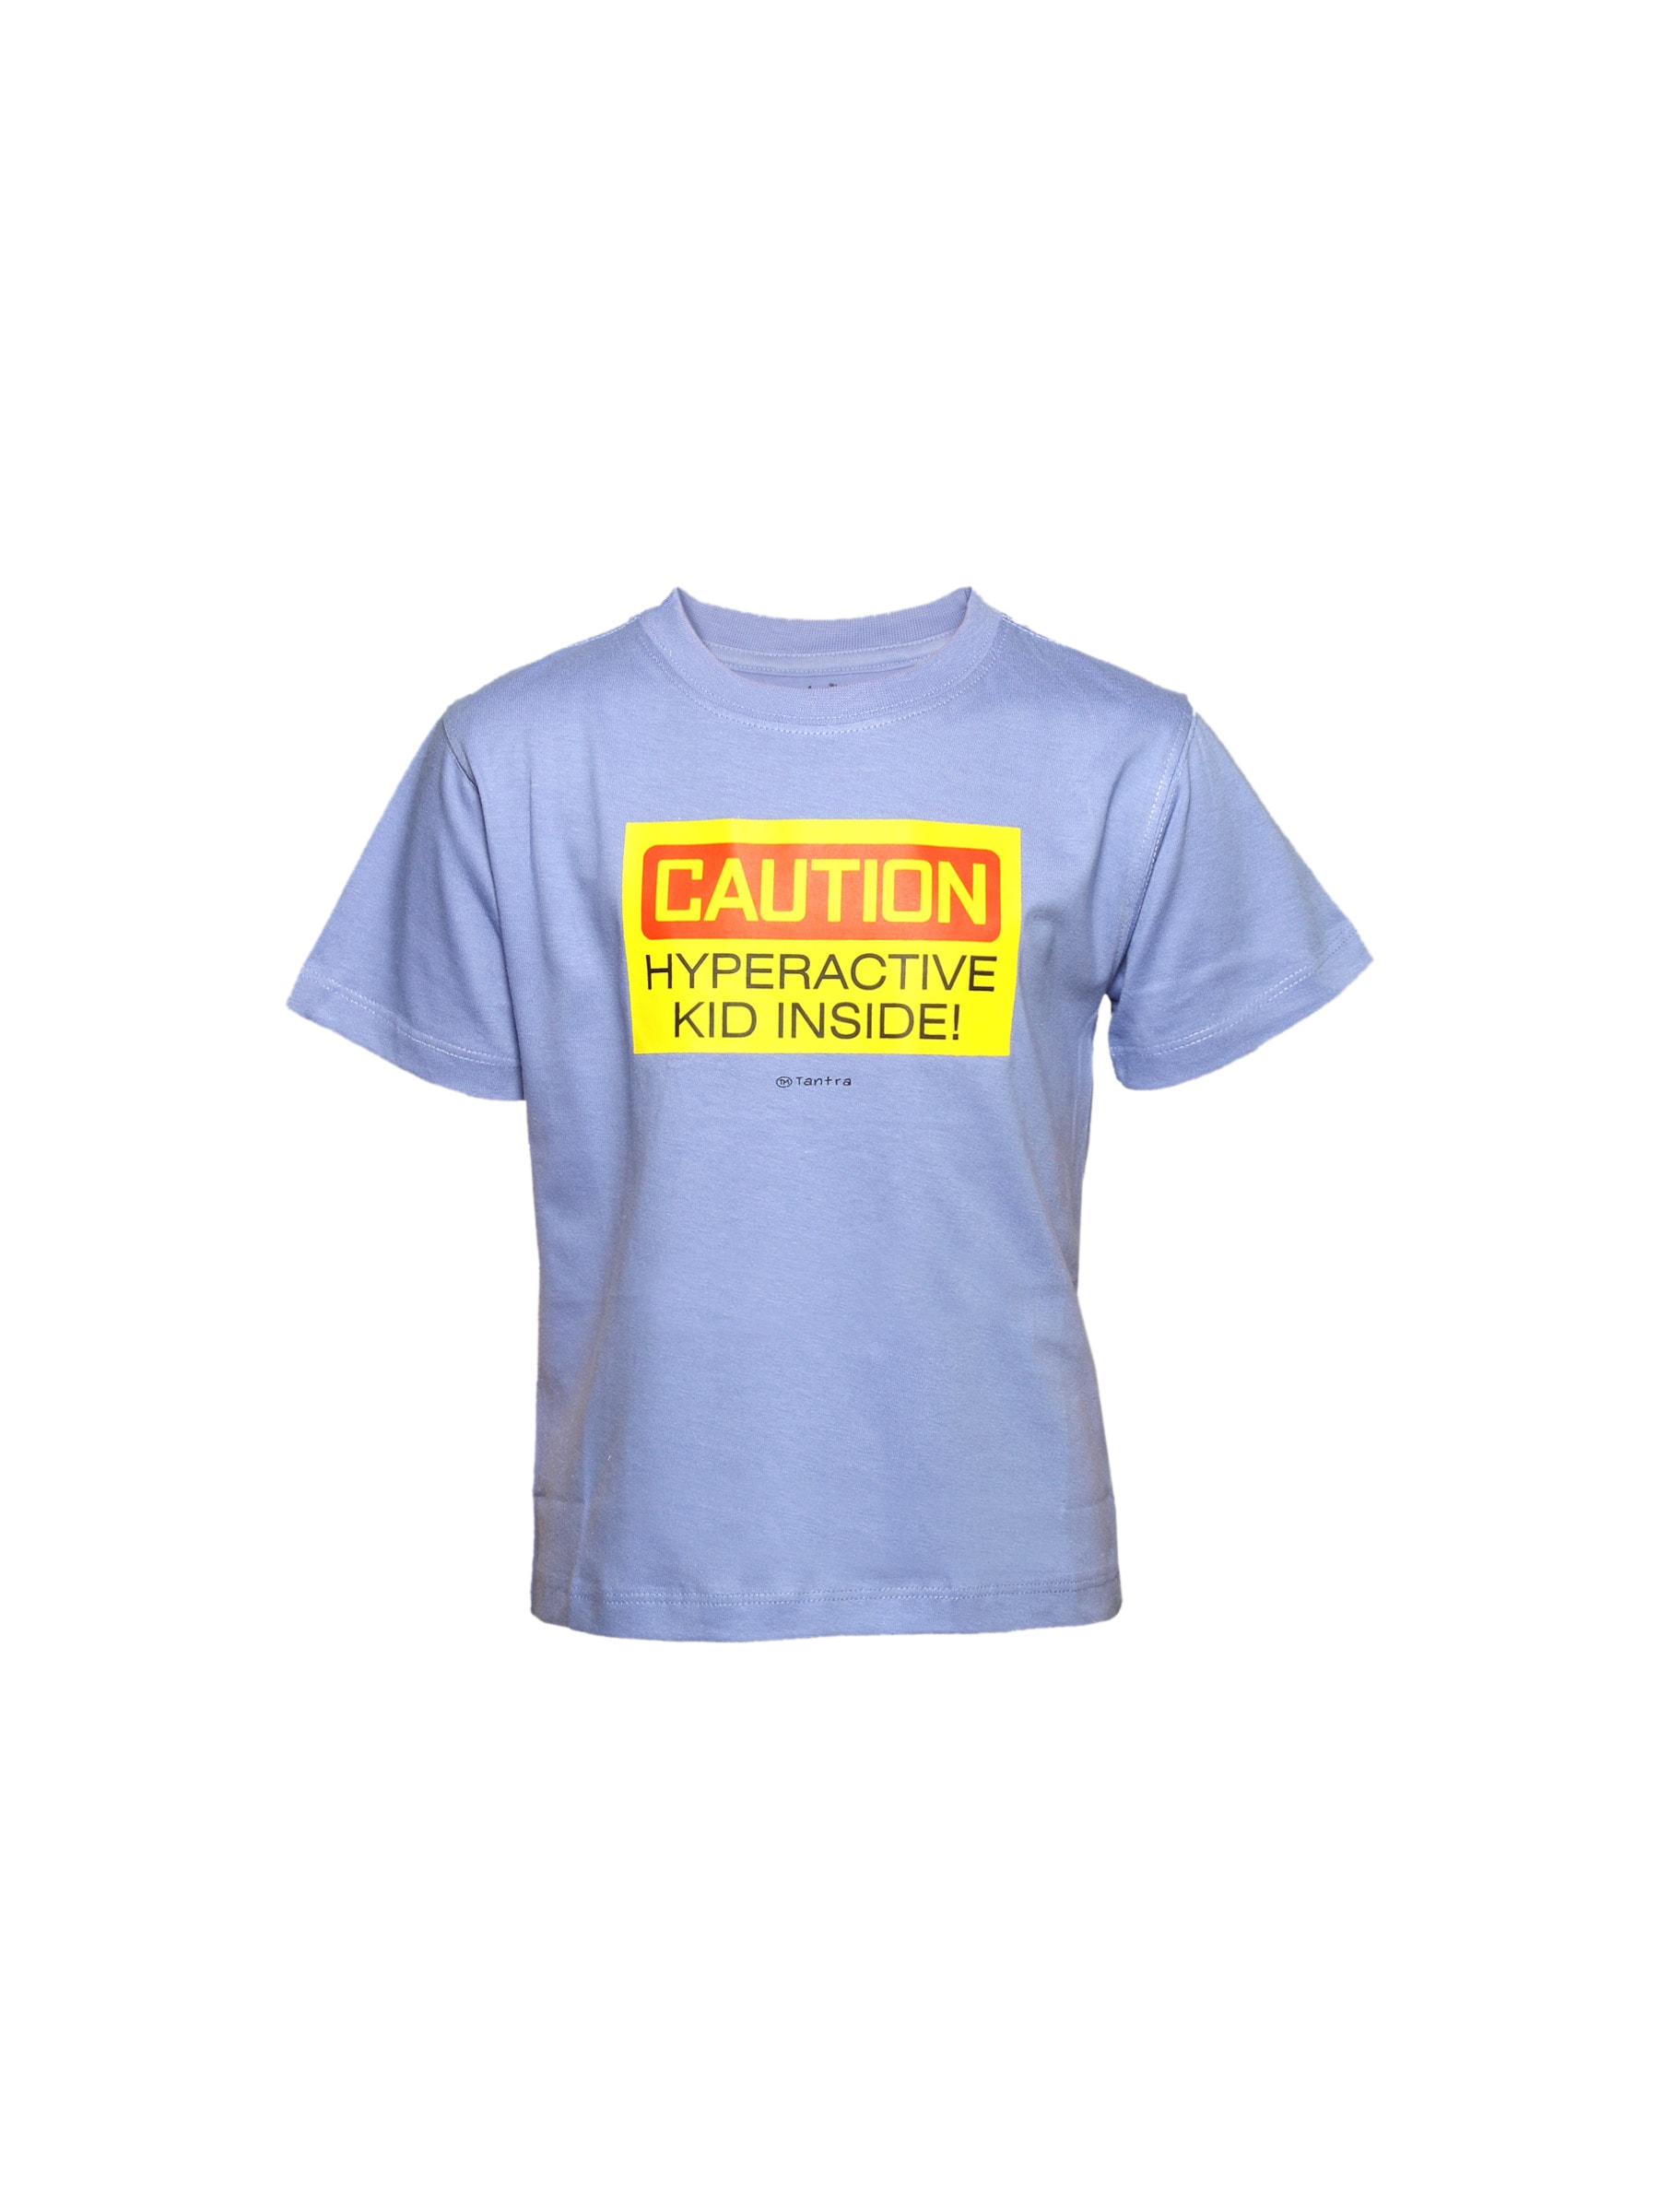 Tantra Kid's Unisex Caution Blue Kidswear